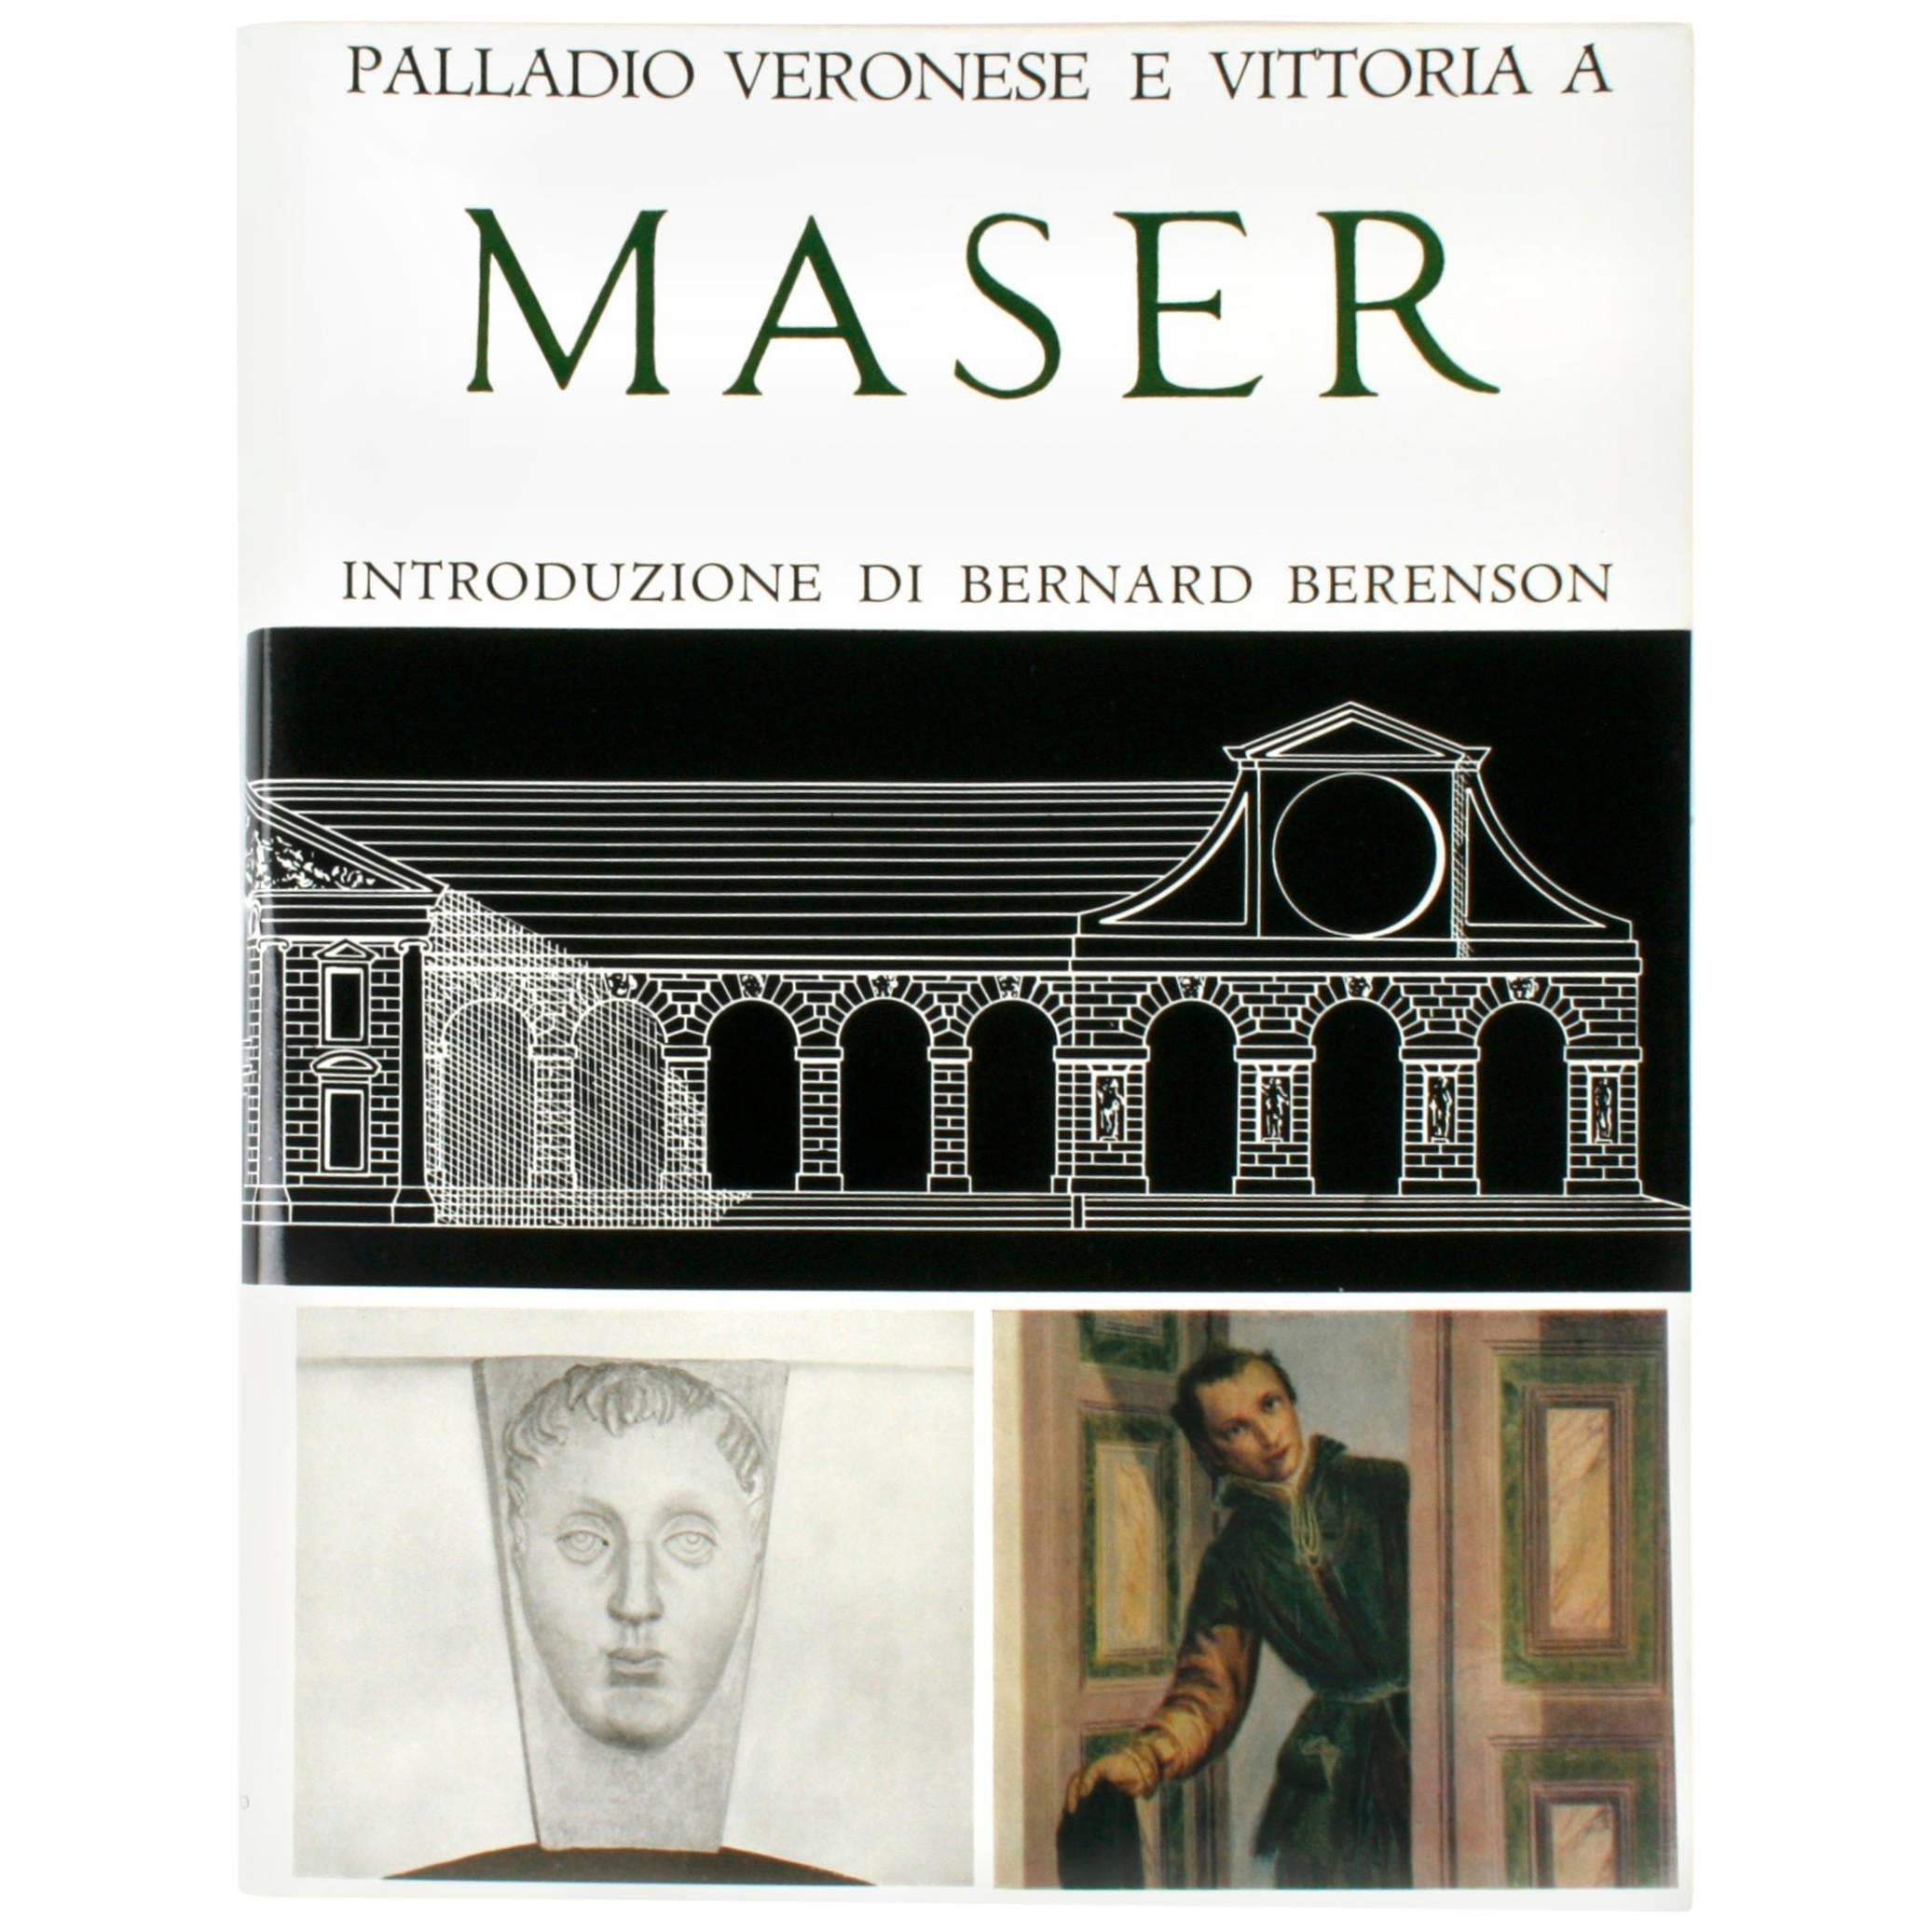 Palladio, Veronese e Vittoria a Maser, First Edition